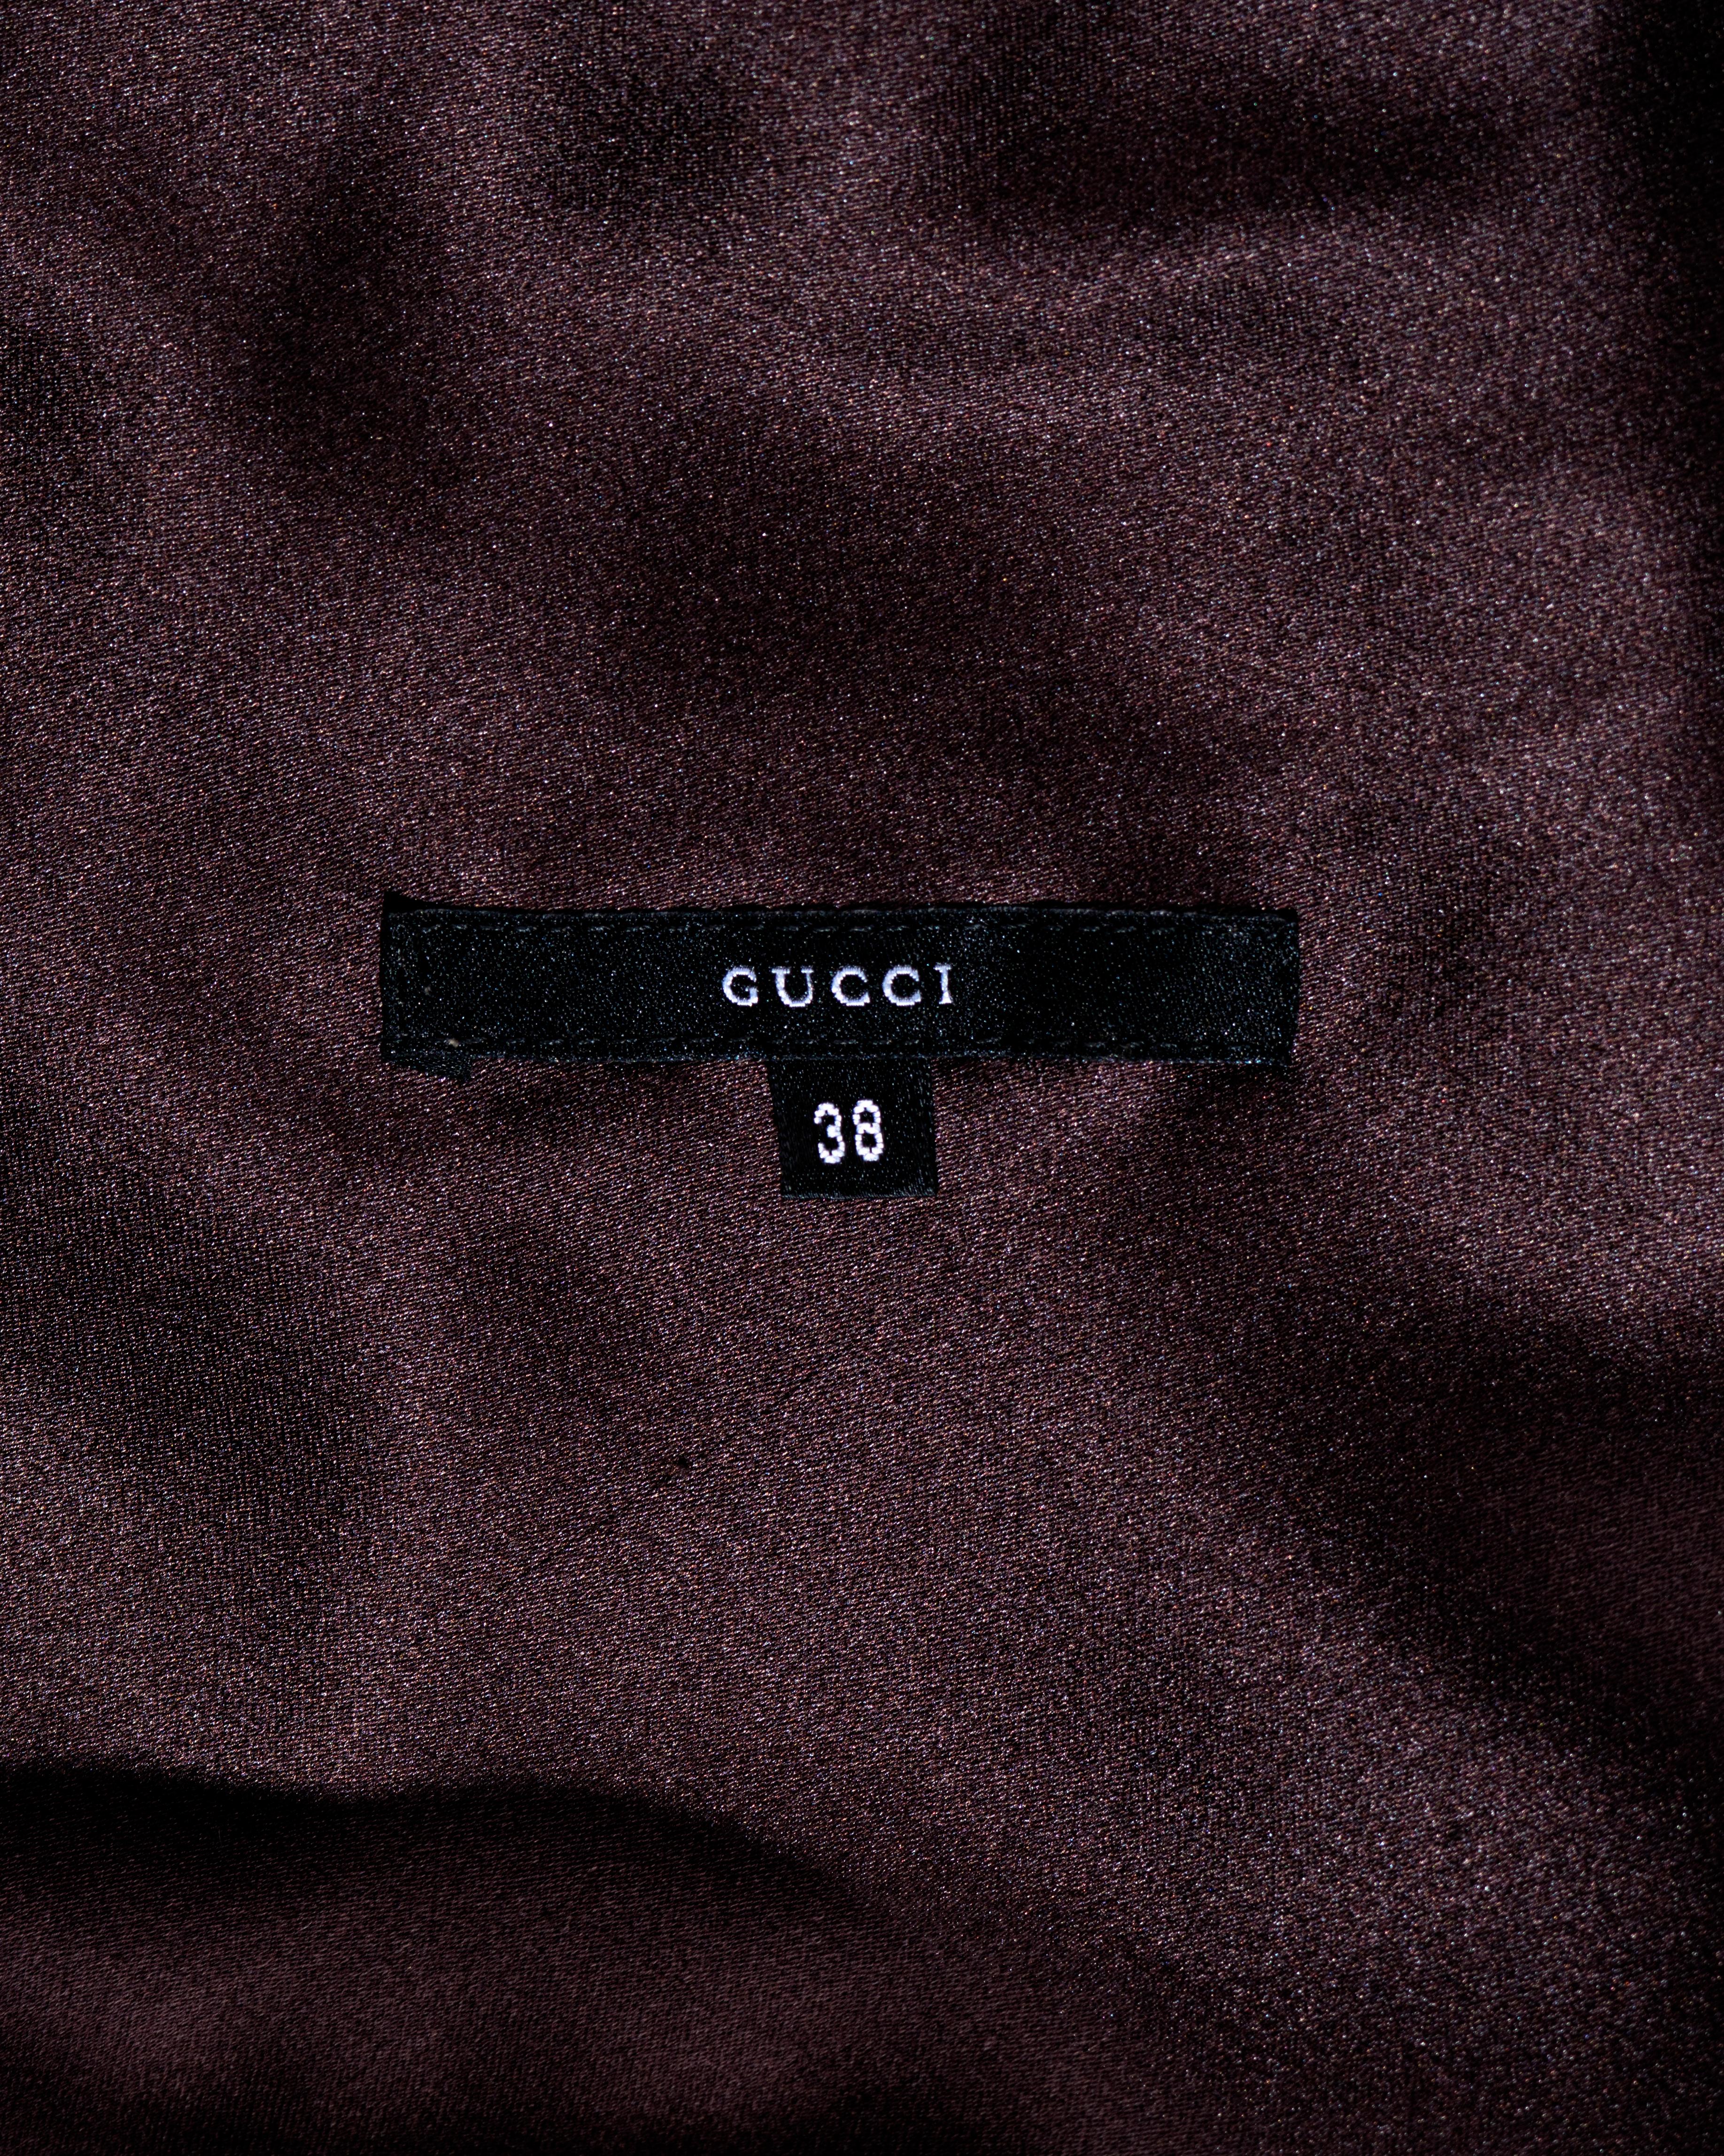 Gucci by Tom Ford brown silk bias cut evening dress with leg slit, fw 1999 1